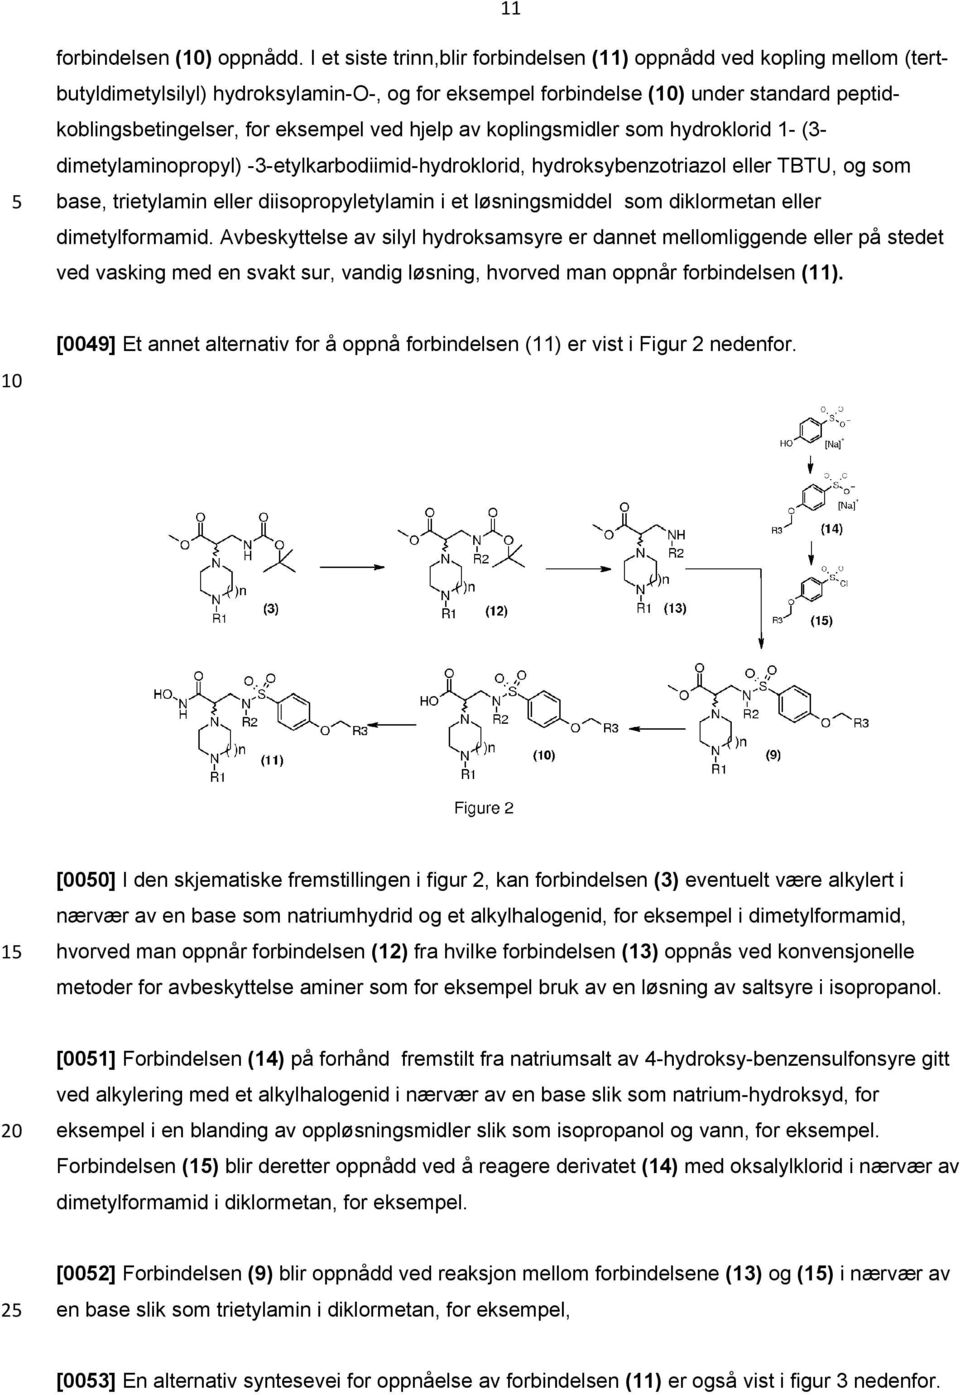 hjelp av koplingsmidler som hydroklorid 1- (3dimetylaminopropyl) -3-etylkarbodiimid-hydroklorid, hydroksybenzotriazol eller TBTU, og som base, trietylamin eller diisopropyletylamin i et